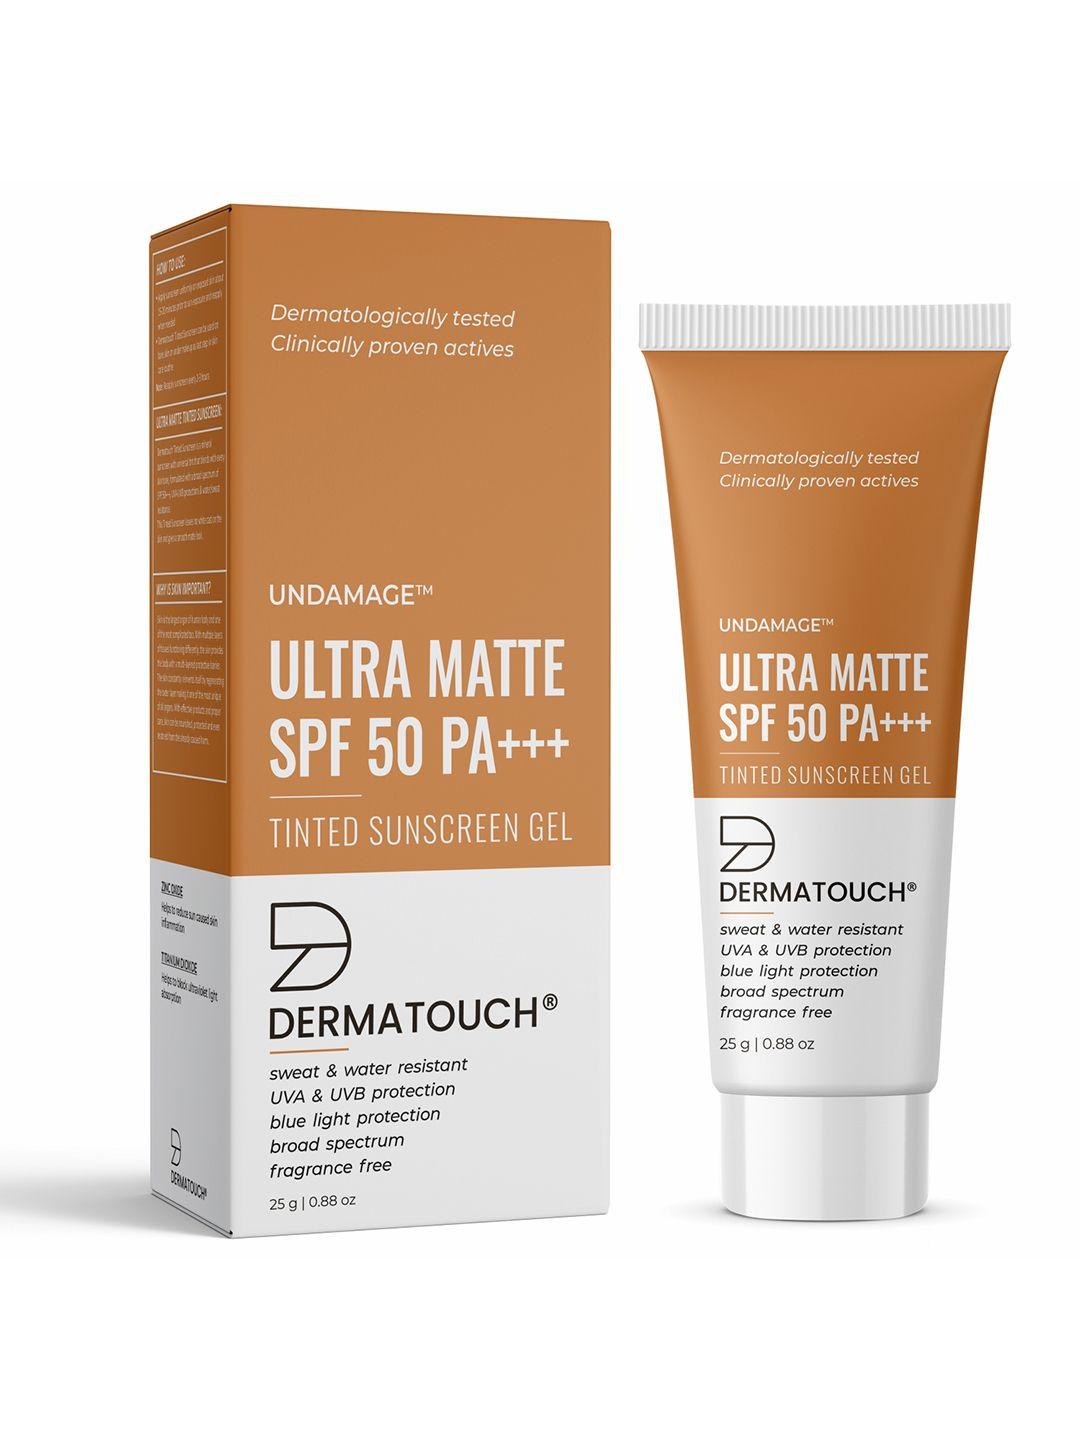 dermatouch undamage water & sweat resistant ultra matte tinted sunscreen spf 50 pa+++ 25gm